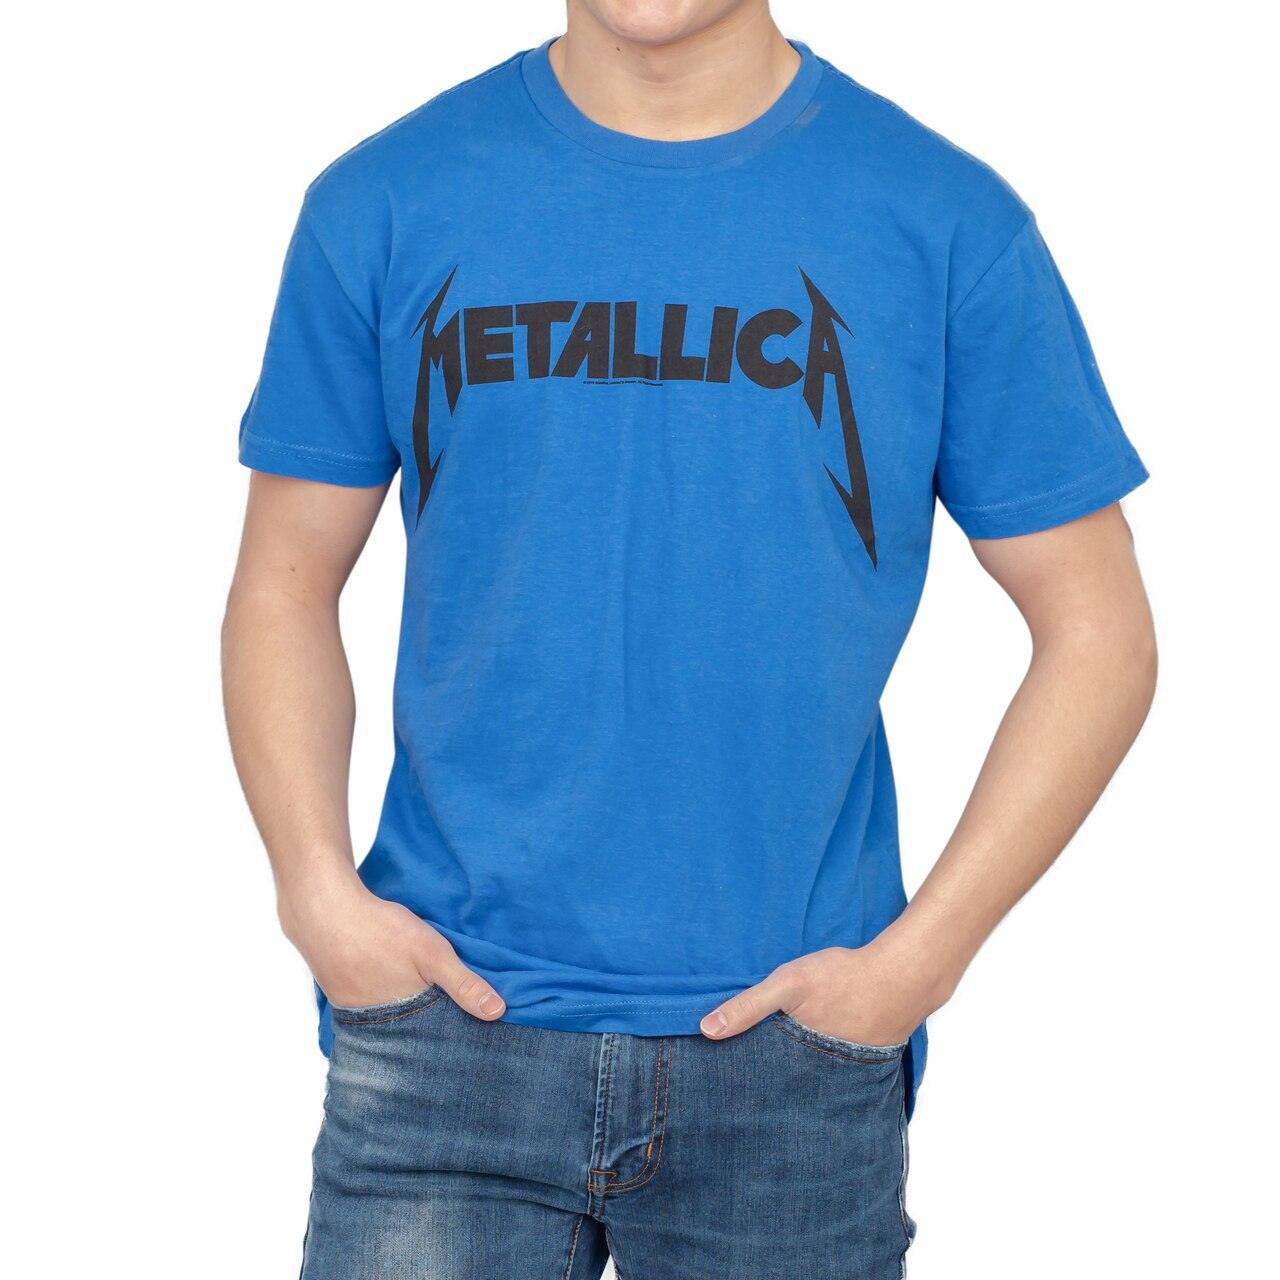 Ryg, ryg, ryg del sandaler udgør Metallica T Shirts - The Classic Metallica T Shirt